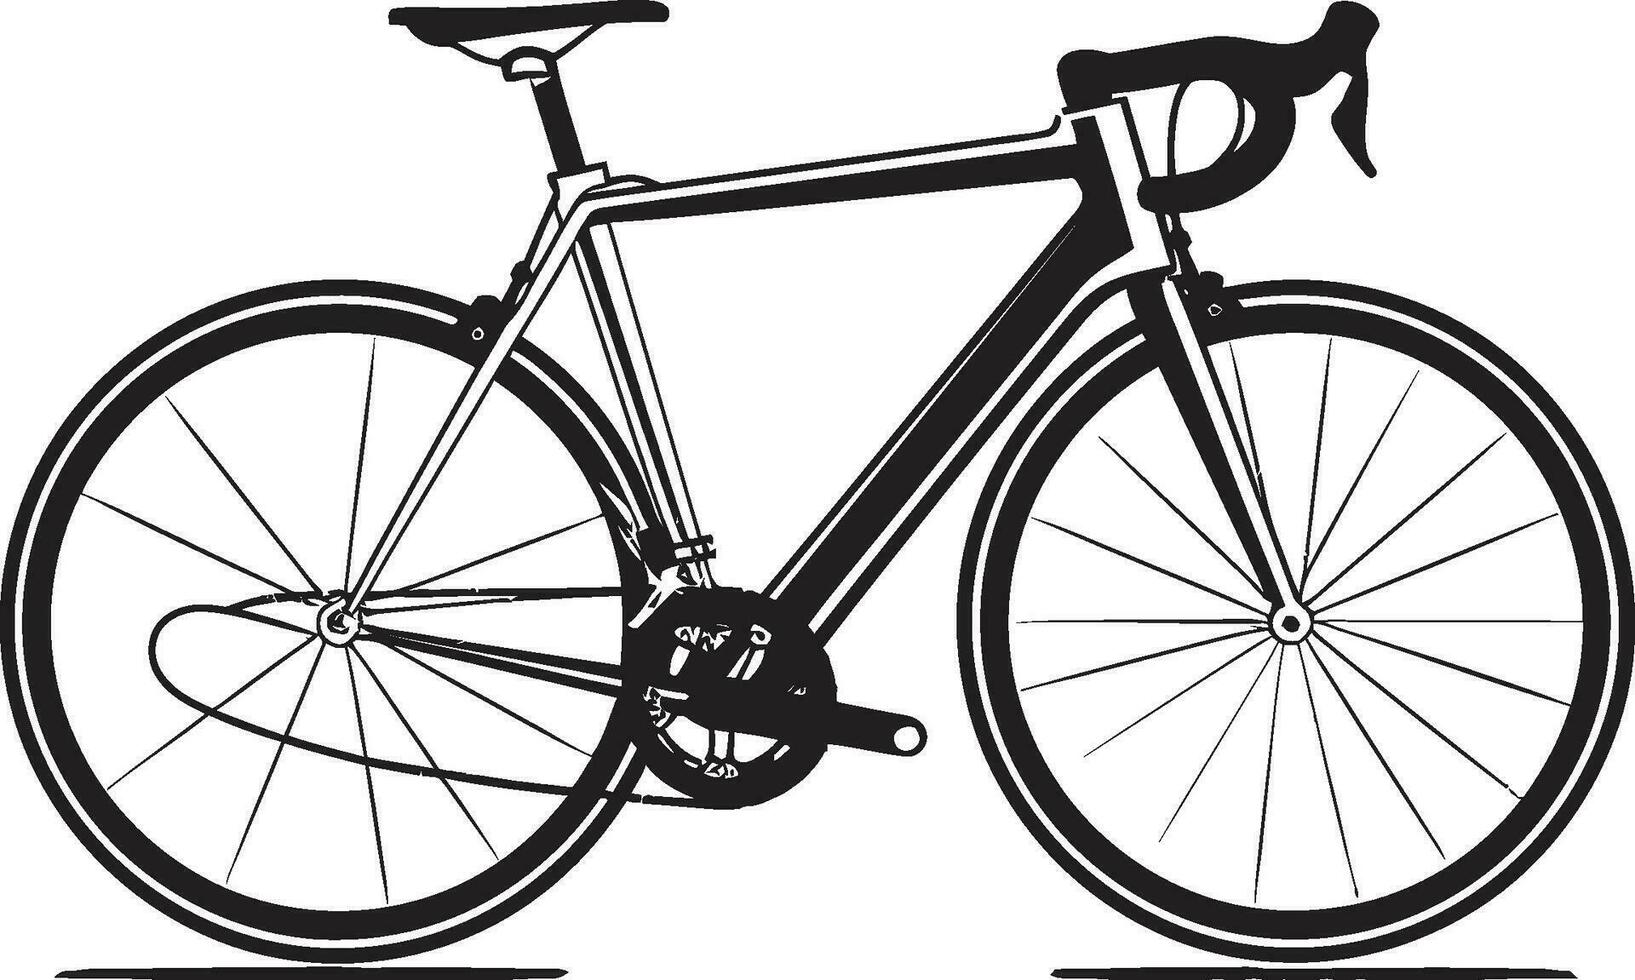 City Cruise Vector Bicycle Logo Classic Wheel Black Bike Design